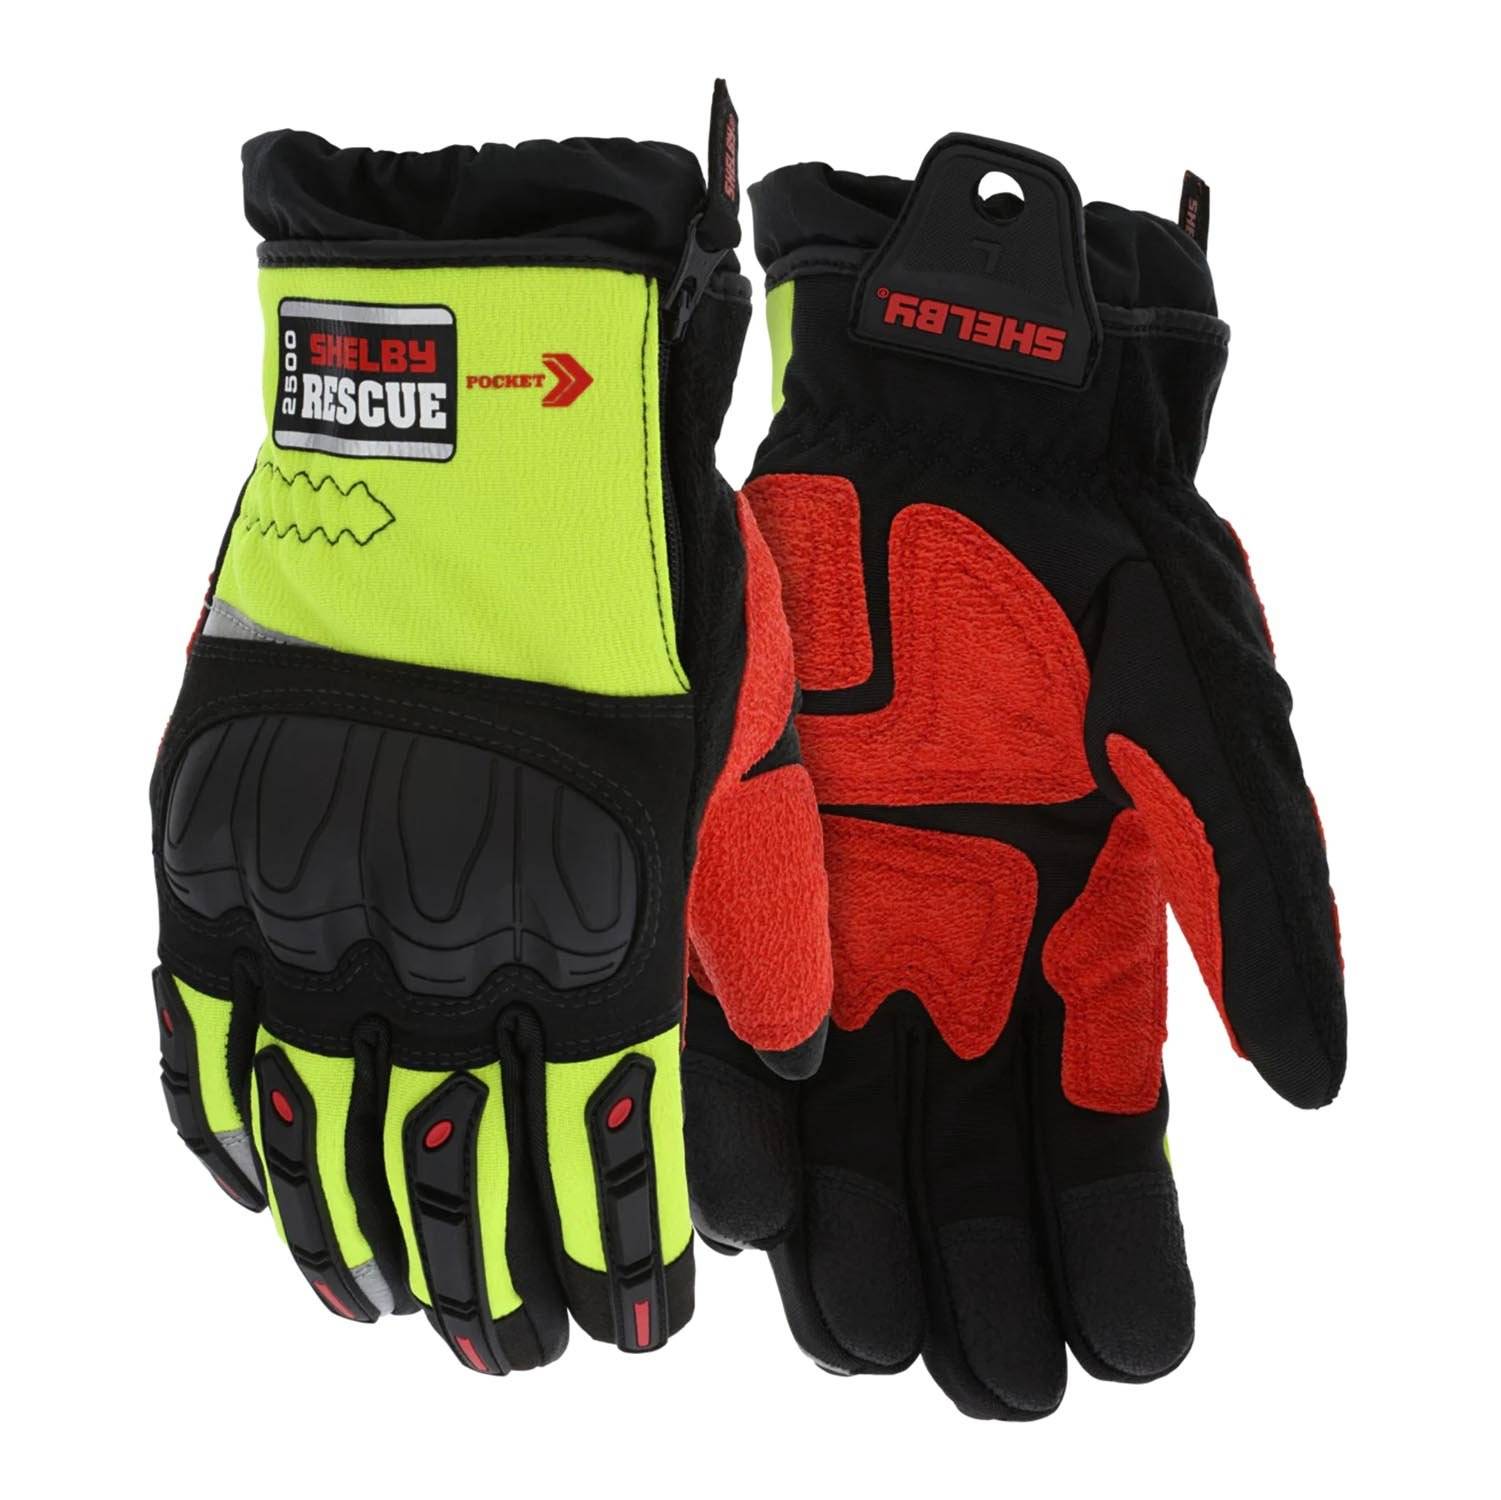 Shelby Big Jake Fire Gauntlet Gloves